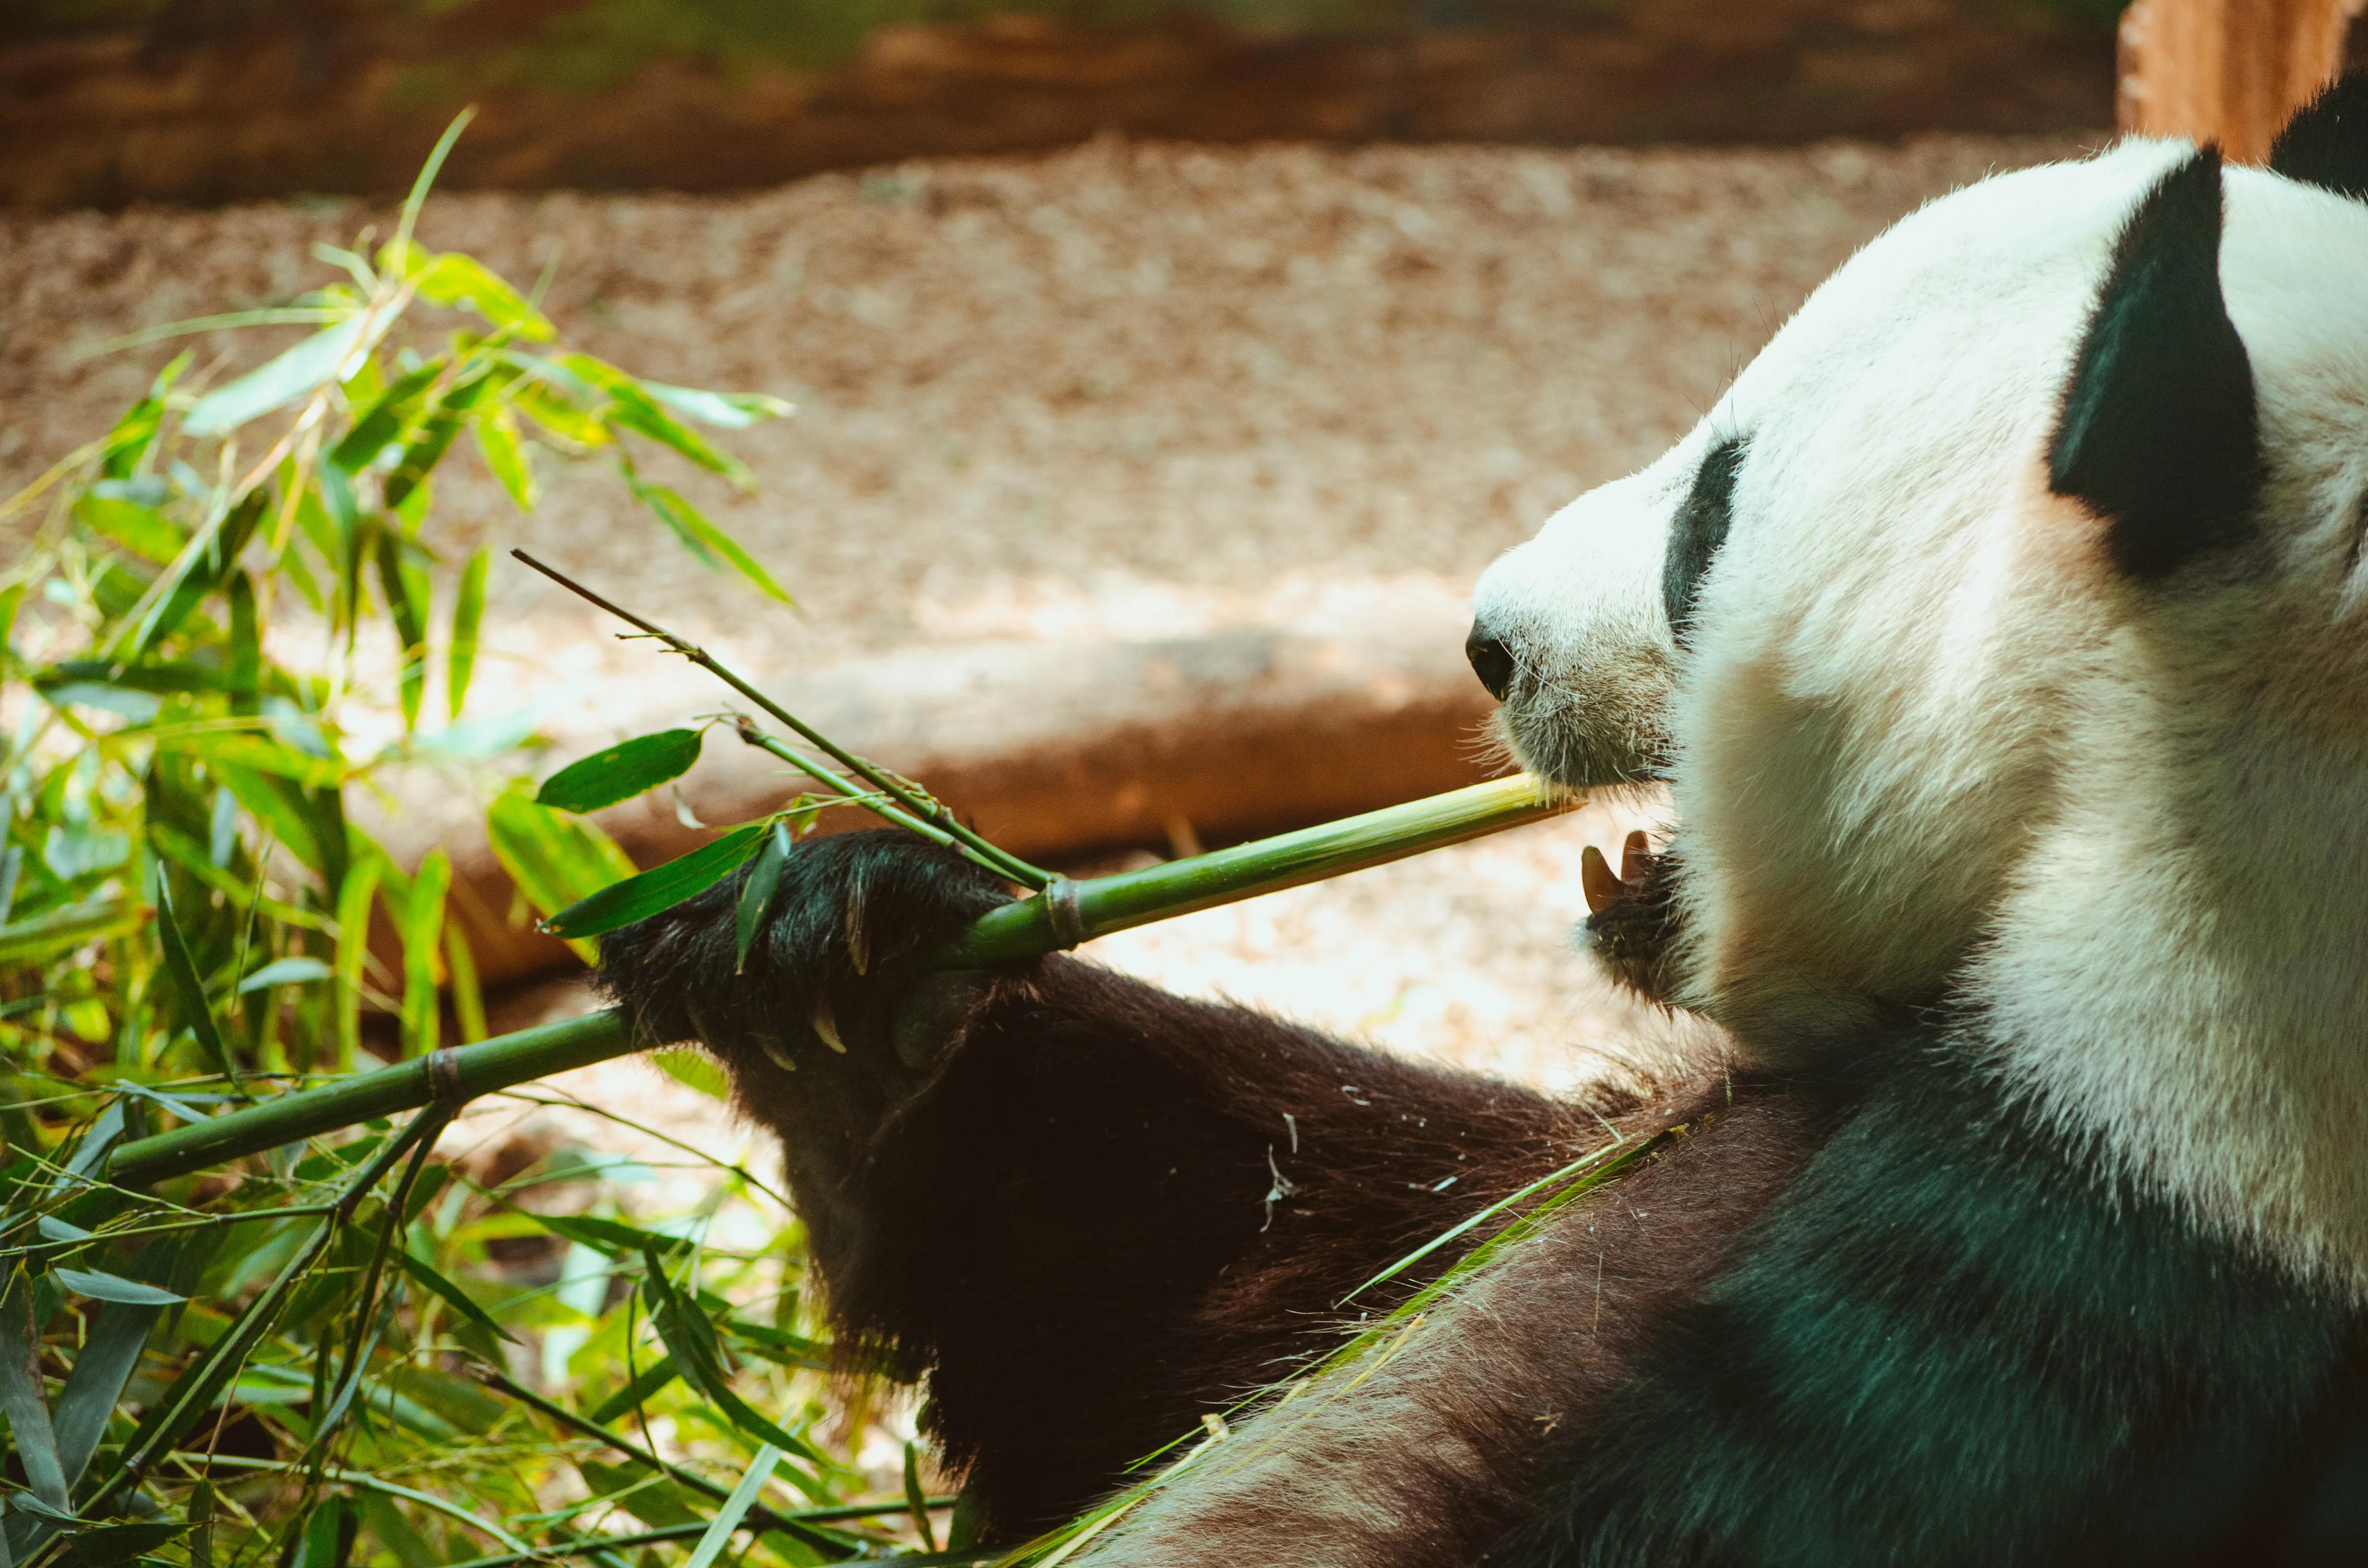 Panda frisst Bambus